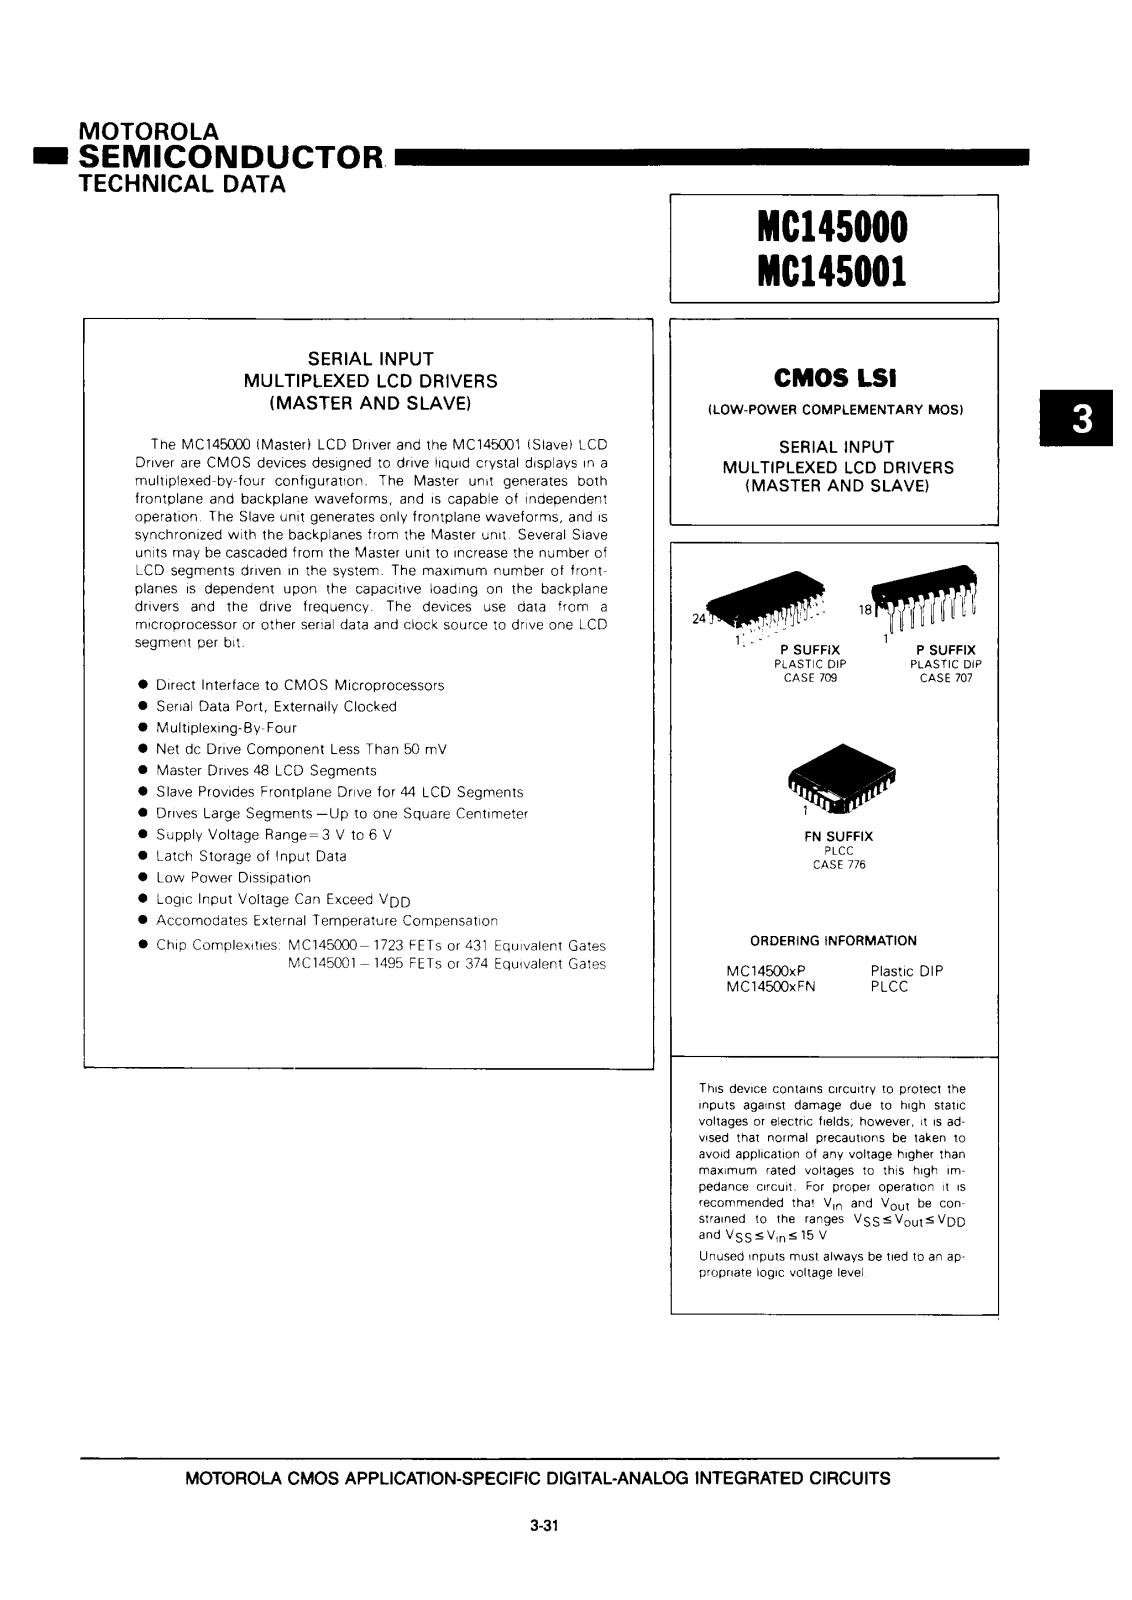 Motorola MC145001P, MC145000FN Datasheet